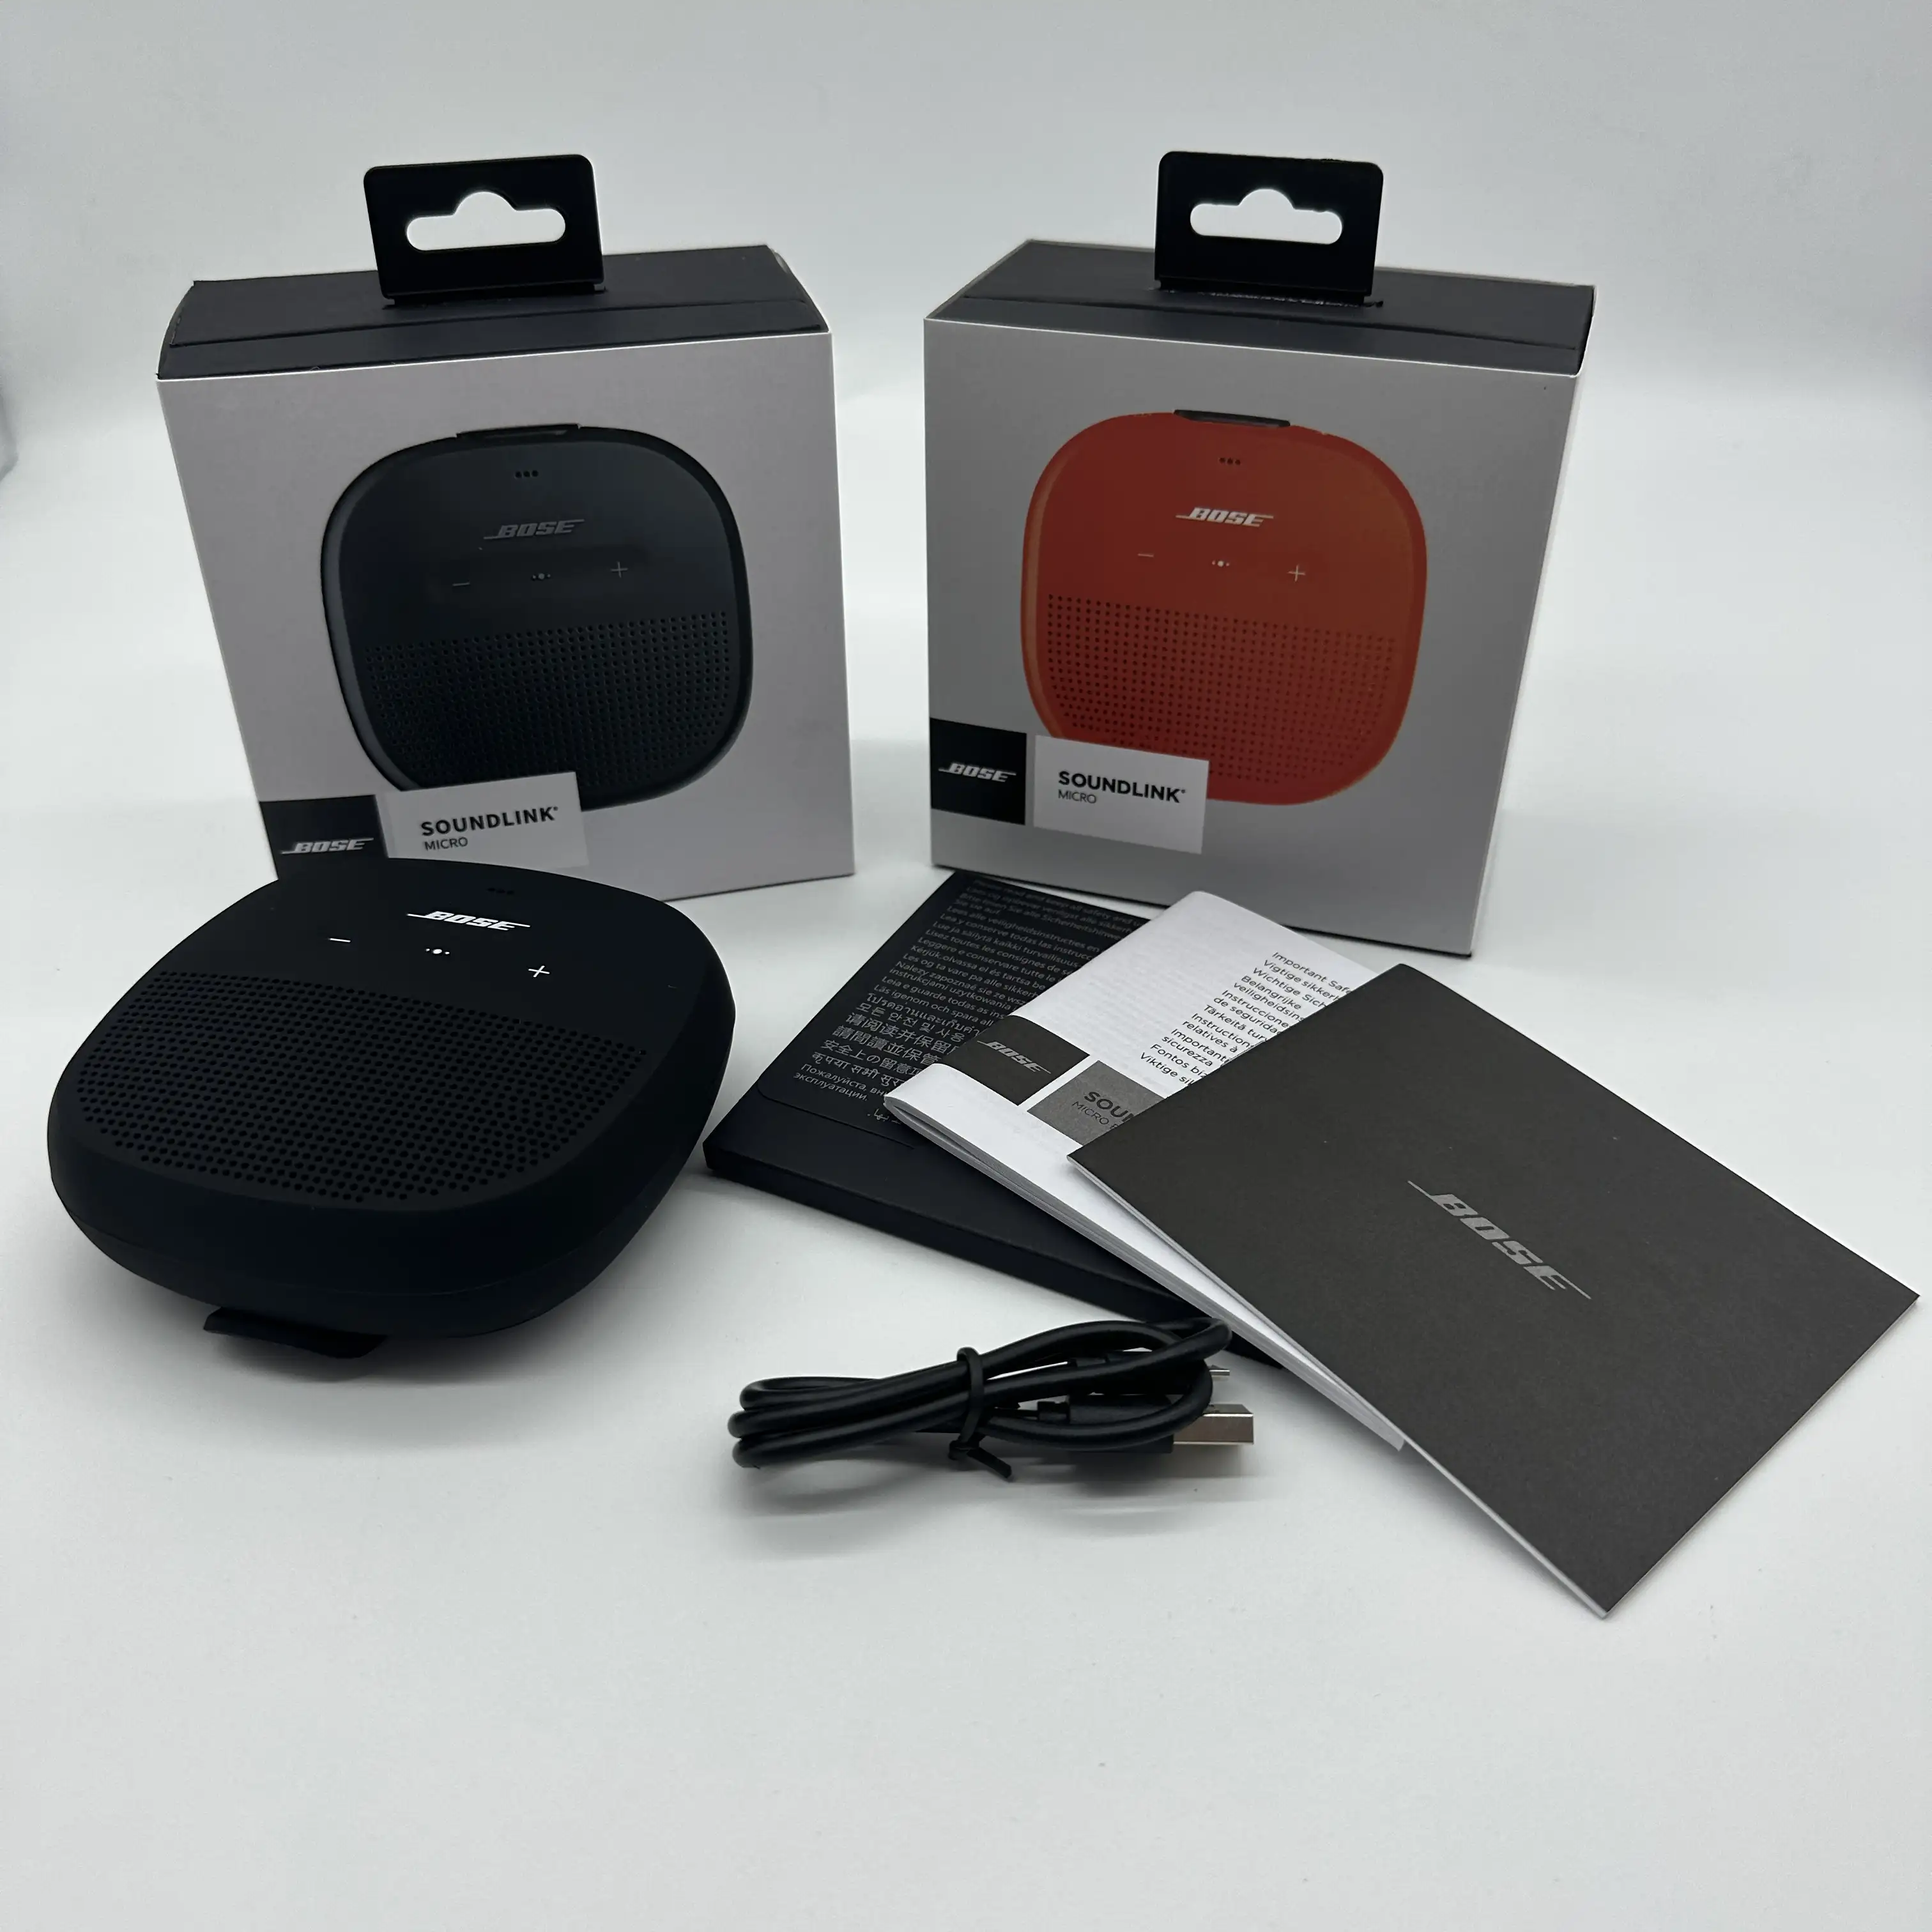 US$ 25.88 ~ US$ 32.35 - Bose SoundLink Micro: Small Portable Bluetooth Speaker m.baoximan.com